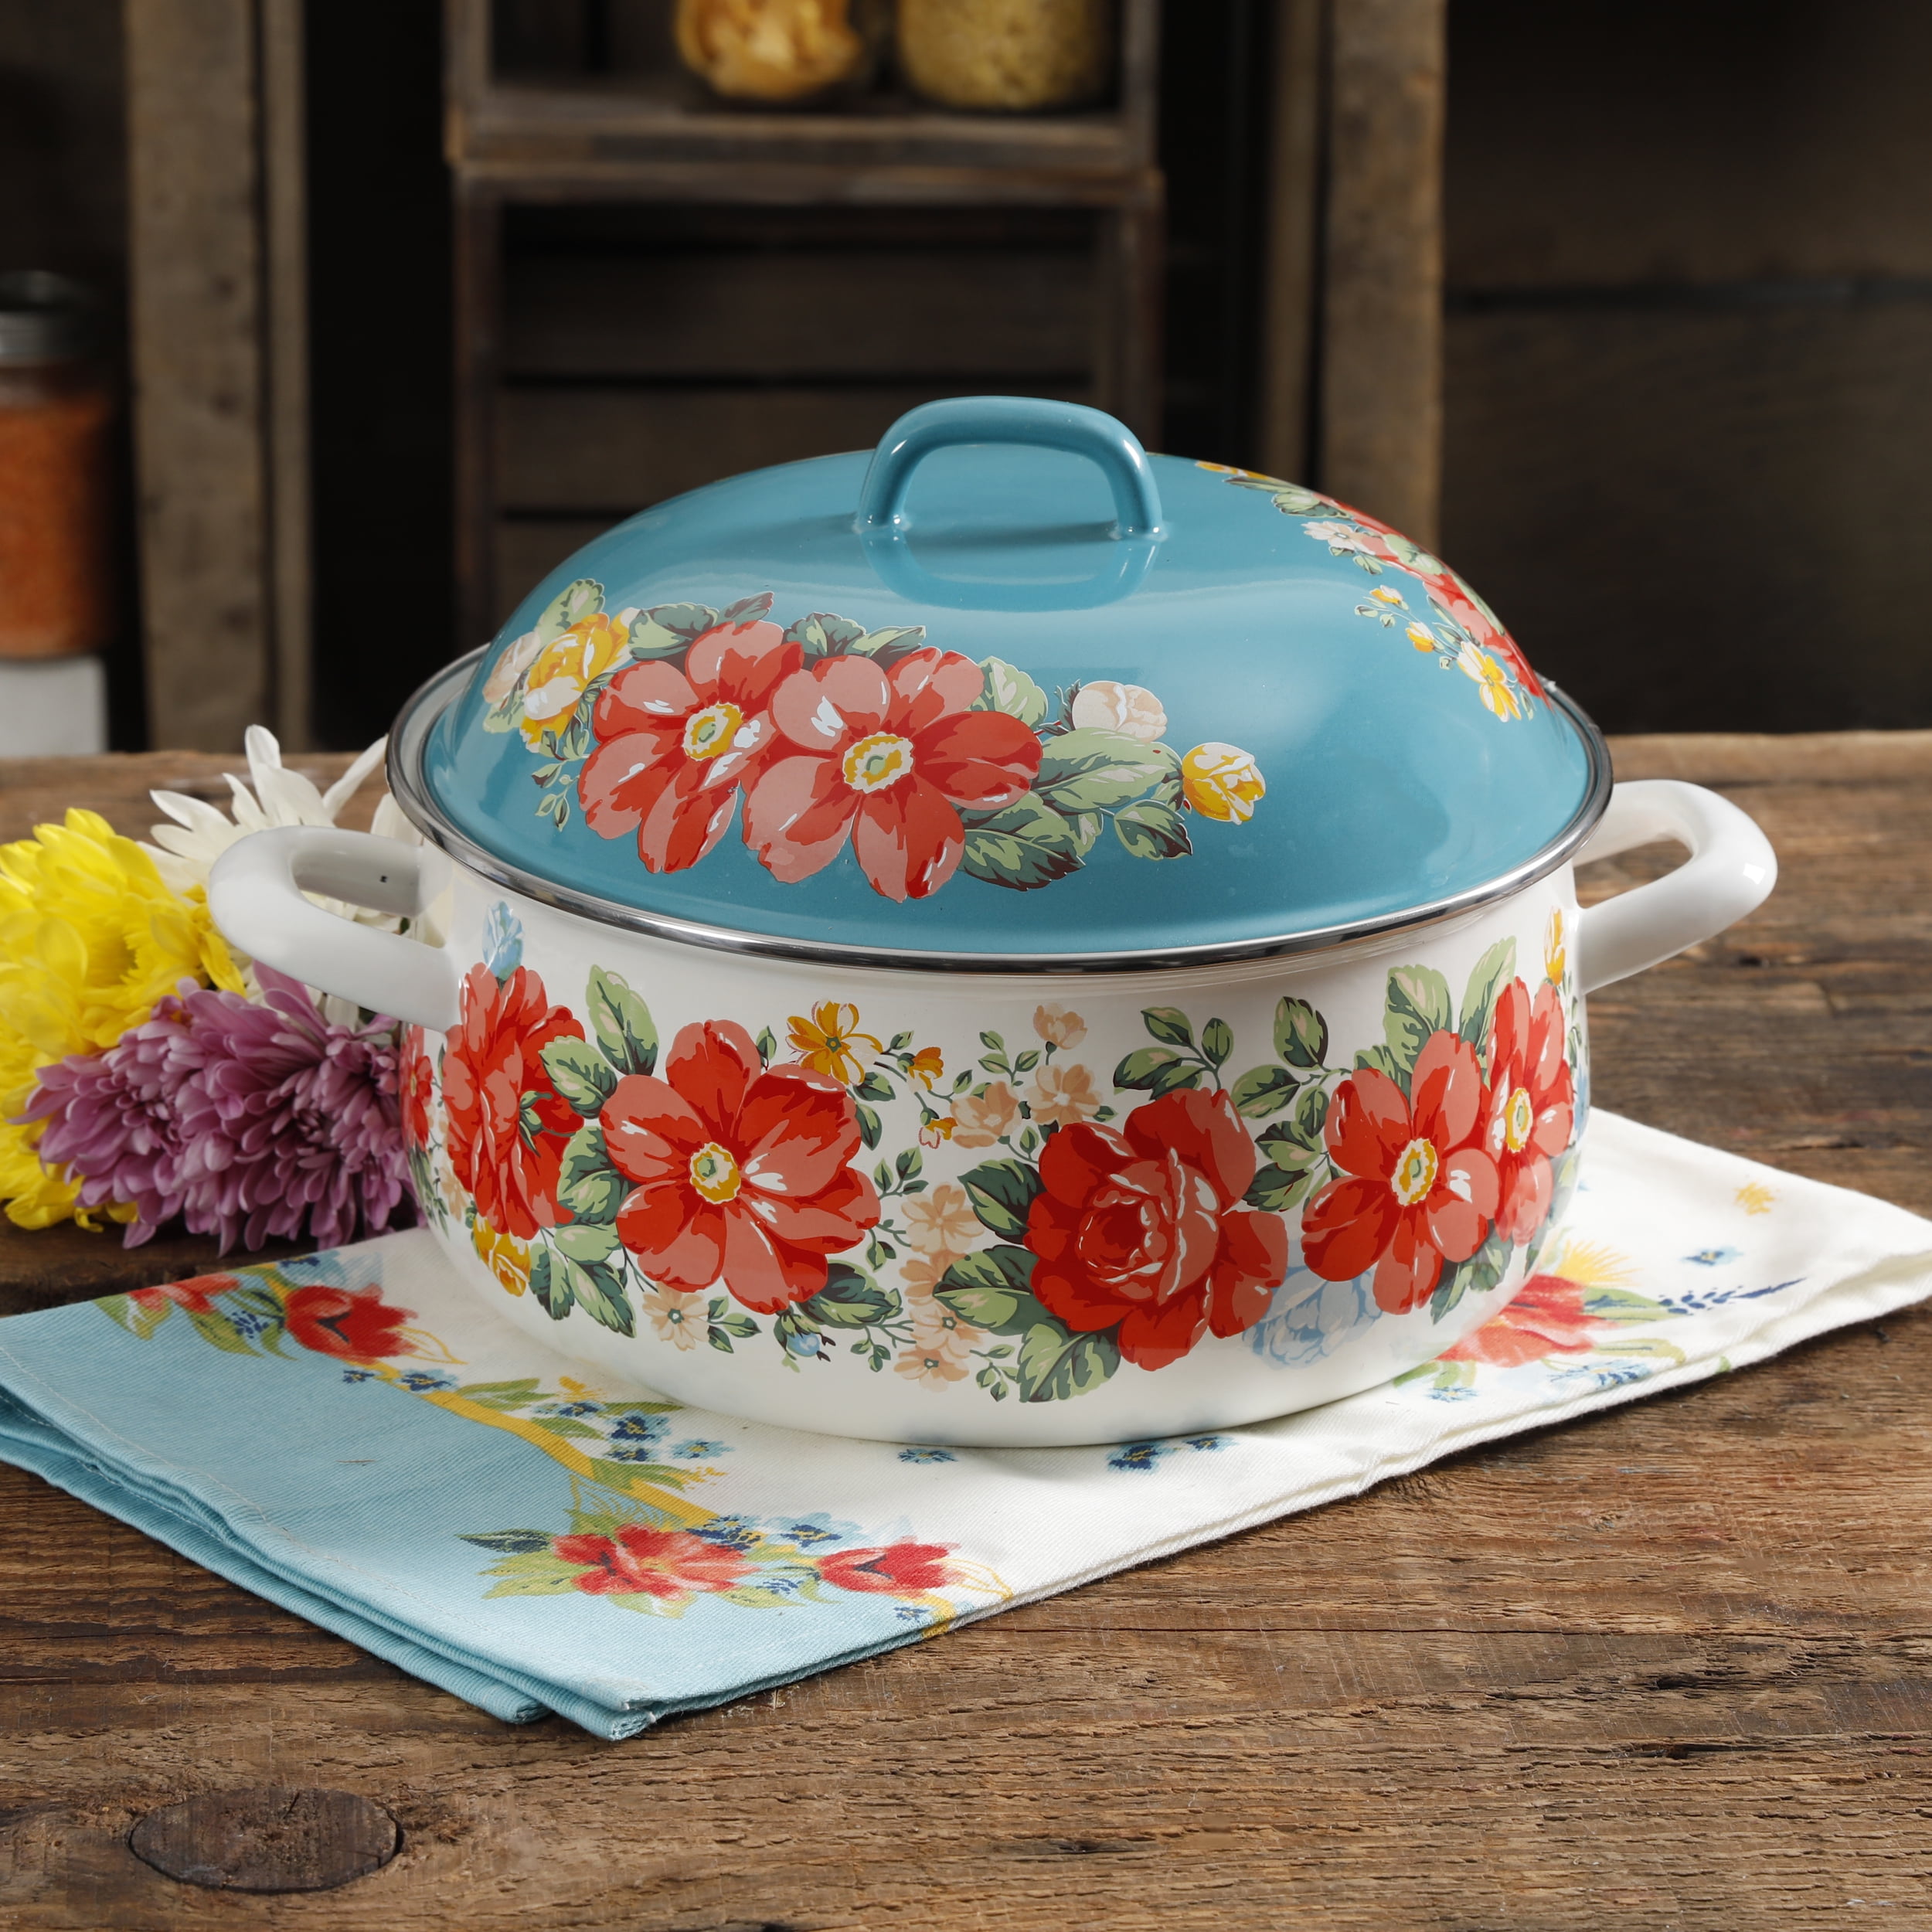 The Pioneer Woman Floral Garden 4-Quart Dutch Oven Multi-Color